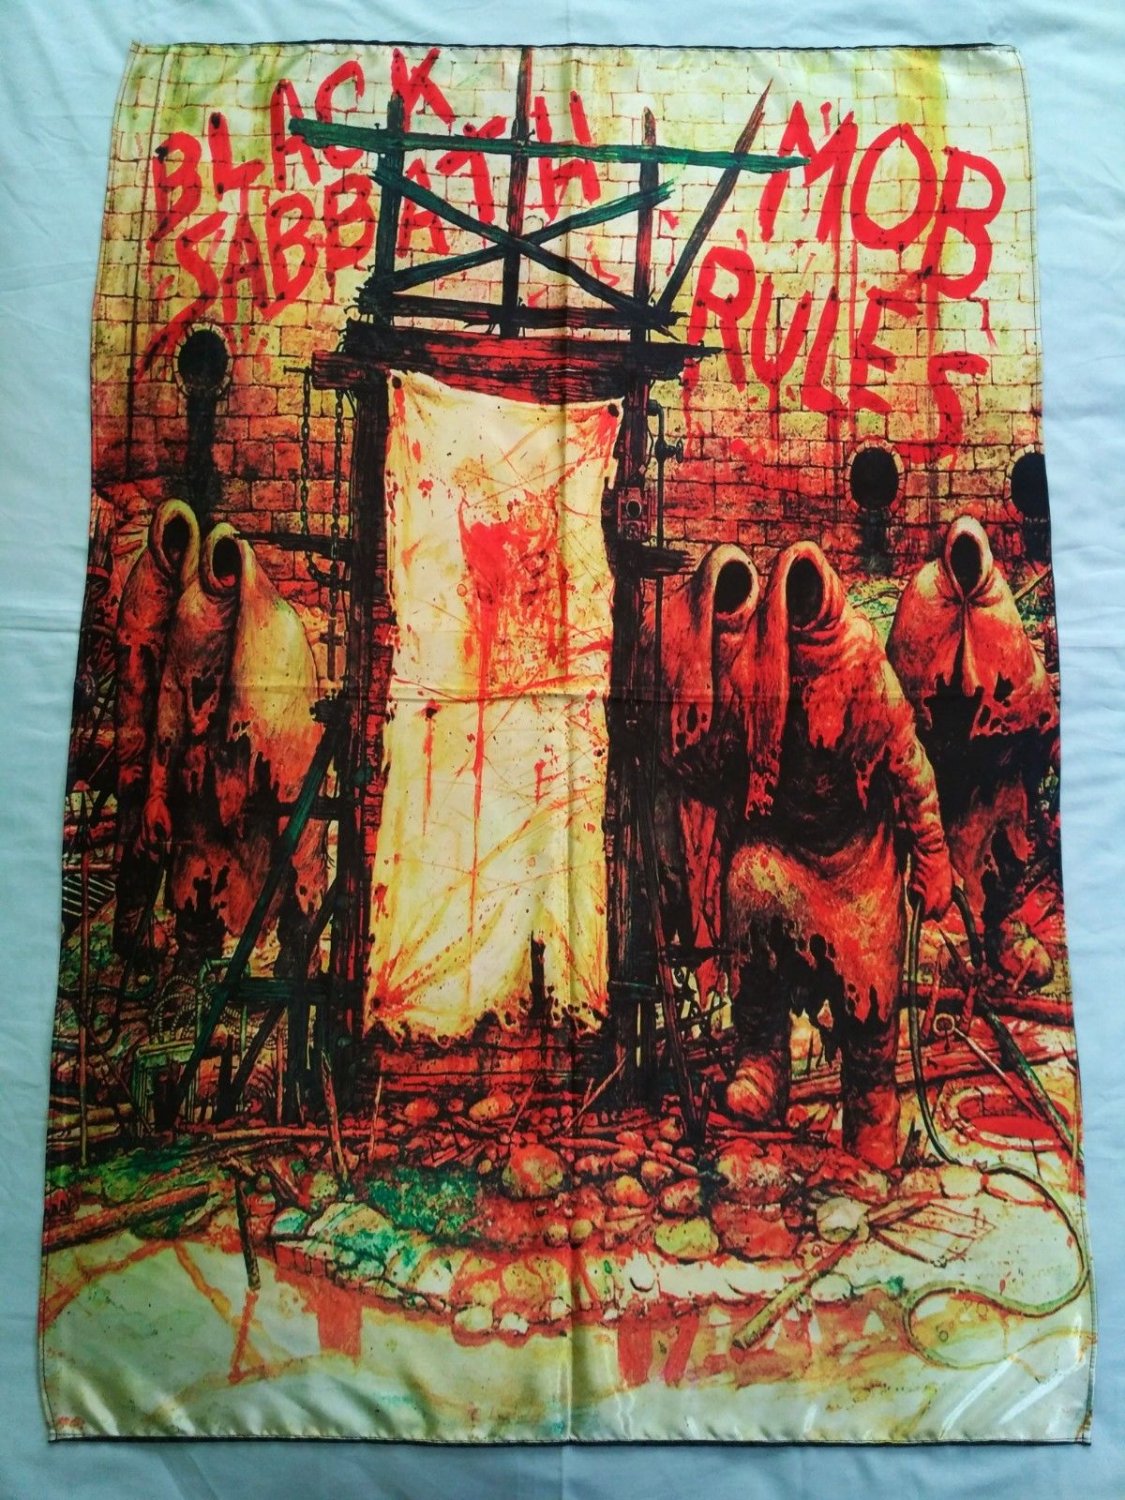 BLACK SABBATH - Mob rules FLAG Heavy METAL cloth poster NWOBHM Ozzy Osbourne